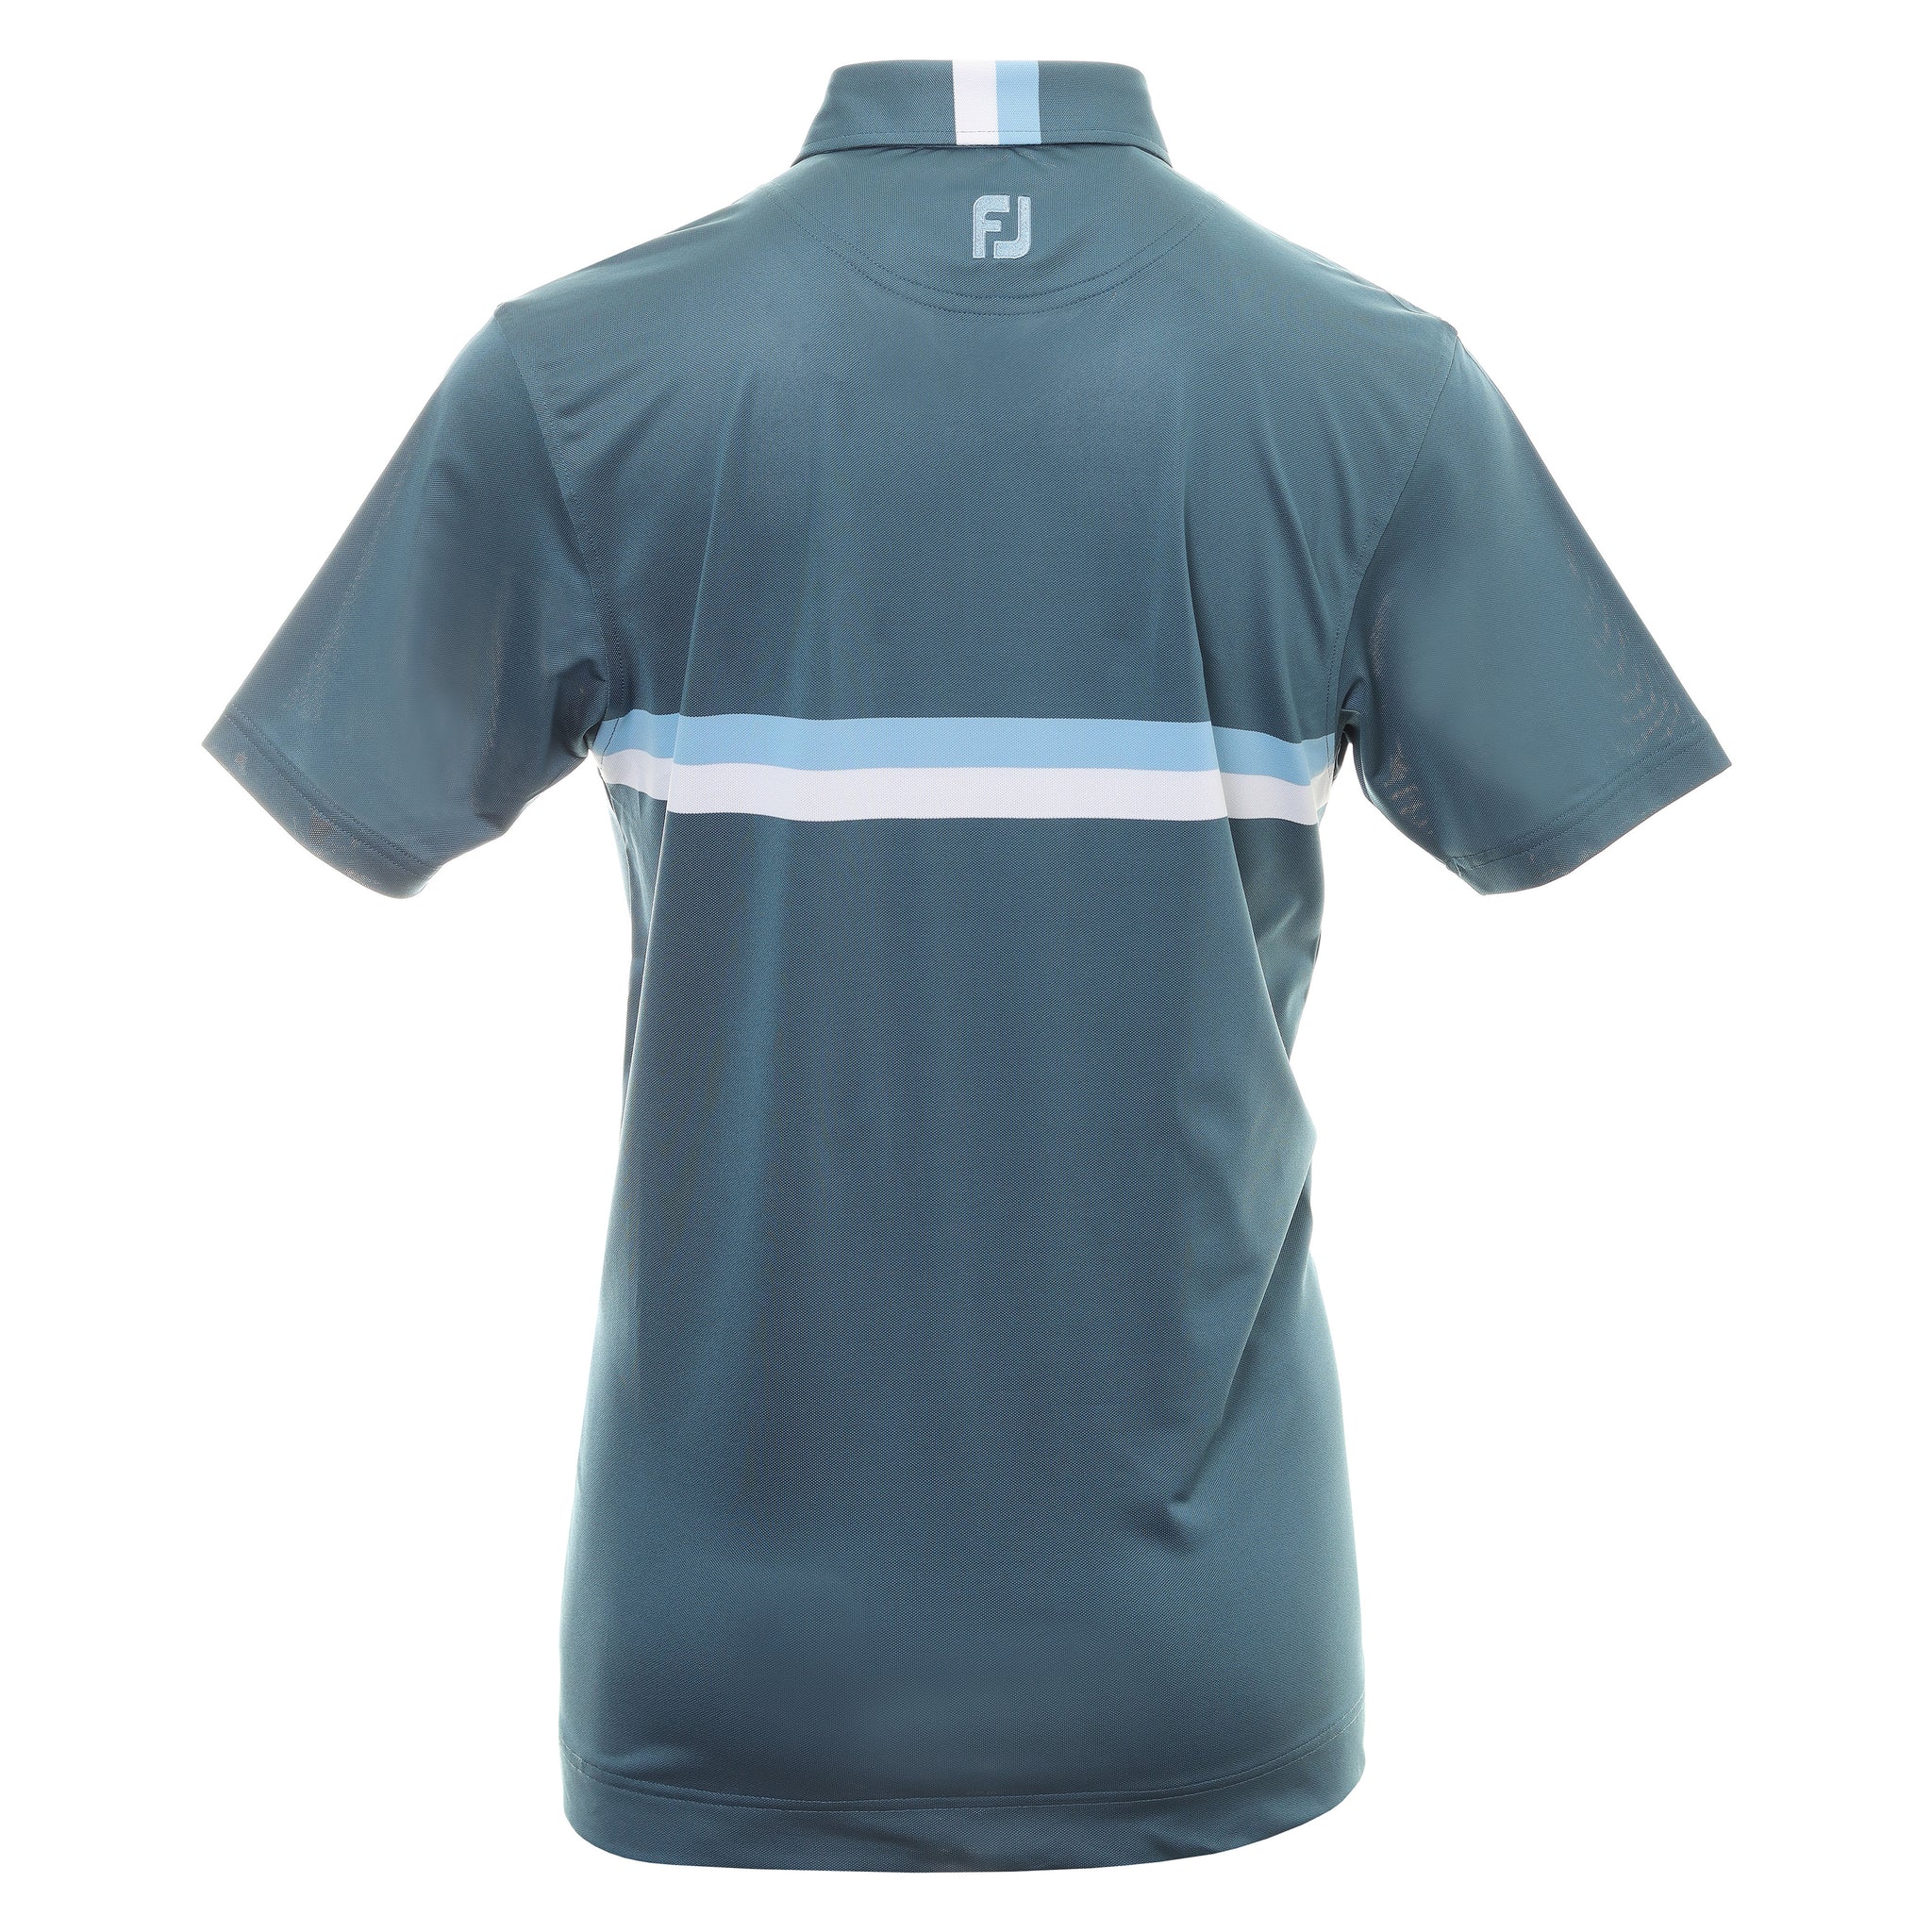 footjoy-double-chest-band-pique-golf-shirt-88391-ink-dusk-blue-white